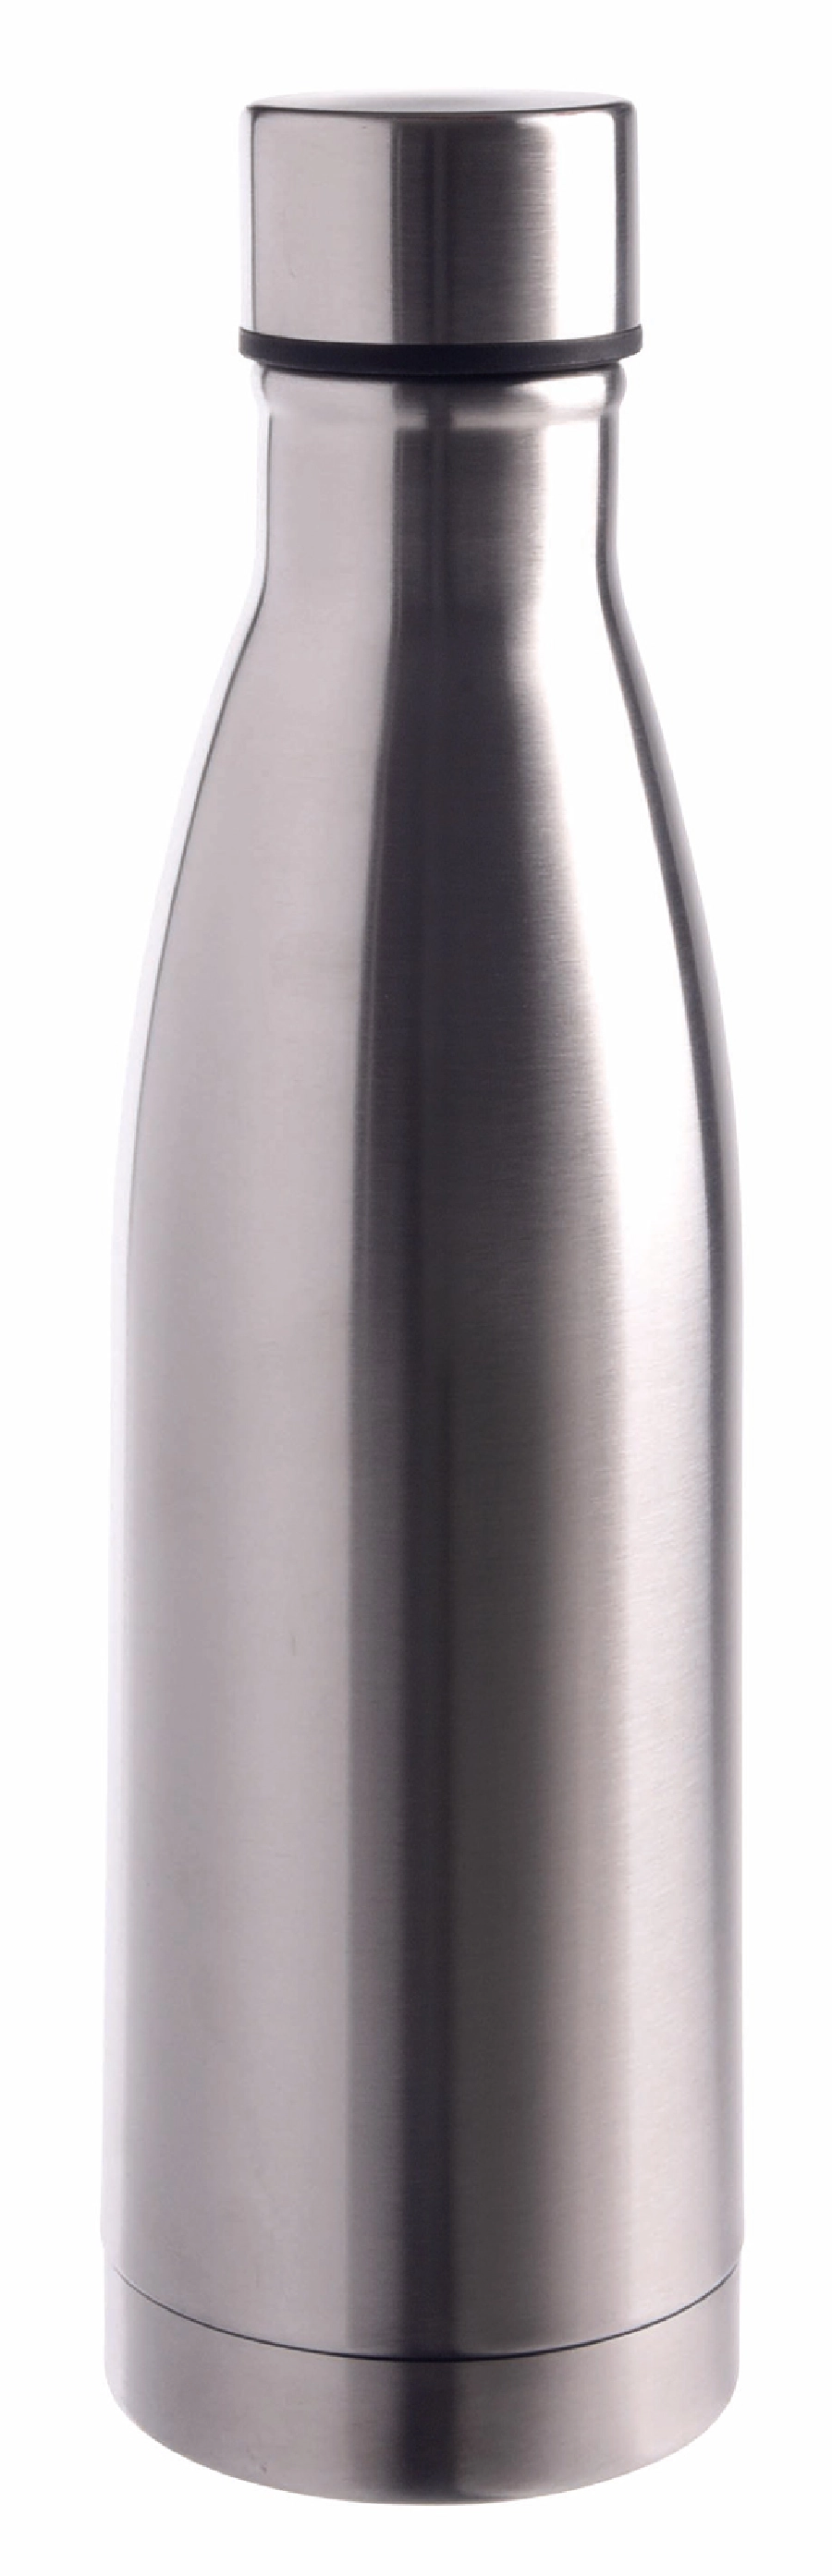 Butelka próżniowa LEGENDY, srebrny 56-0304552